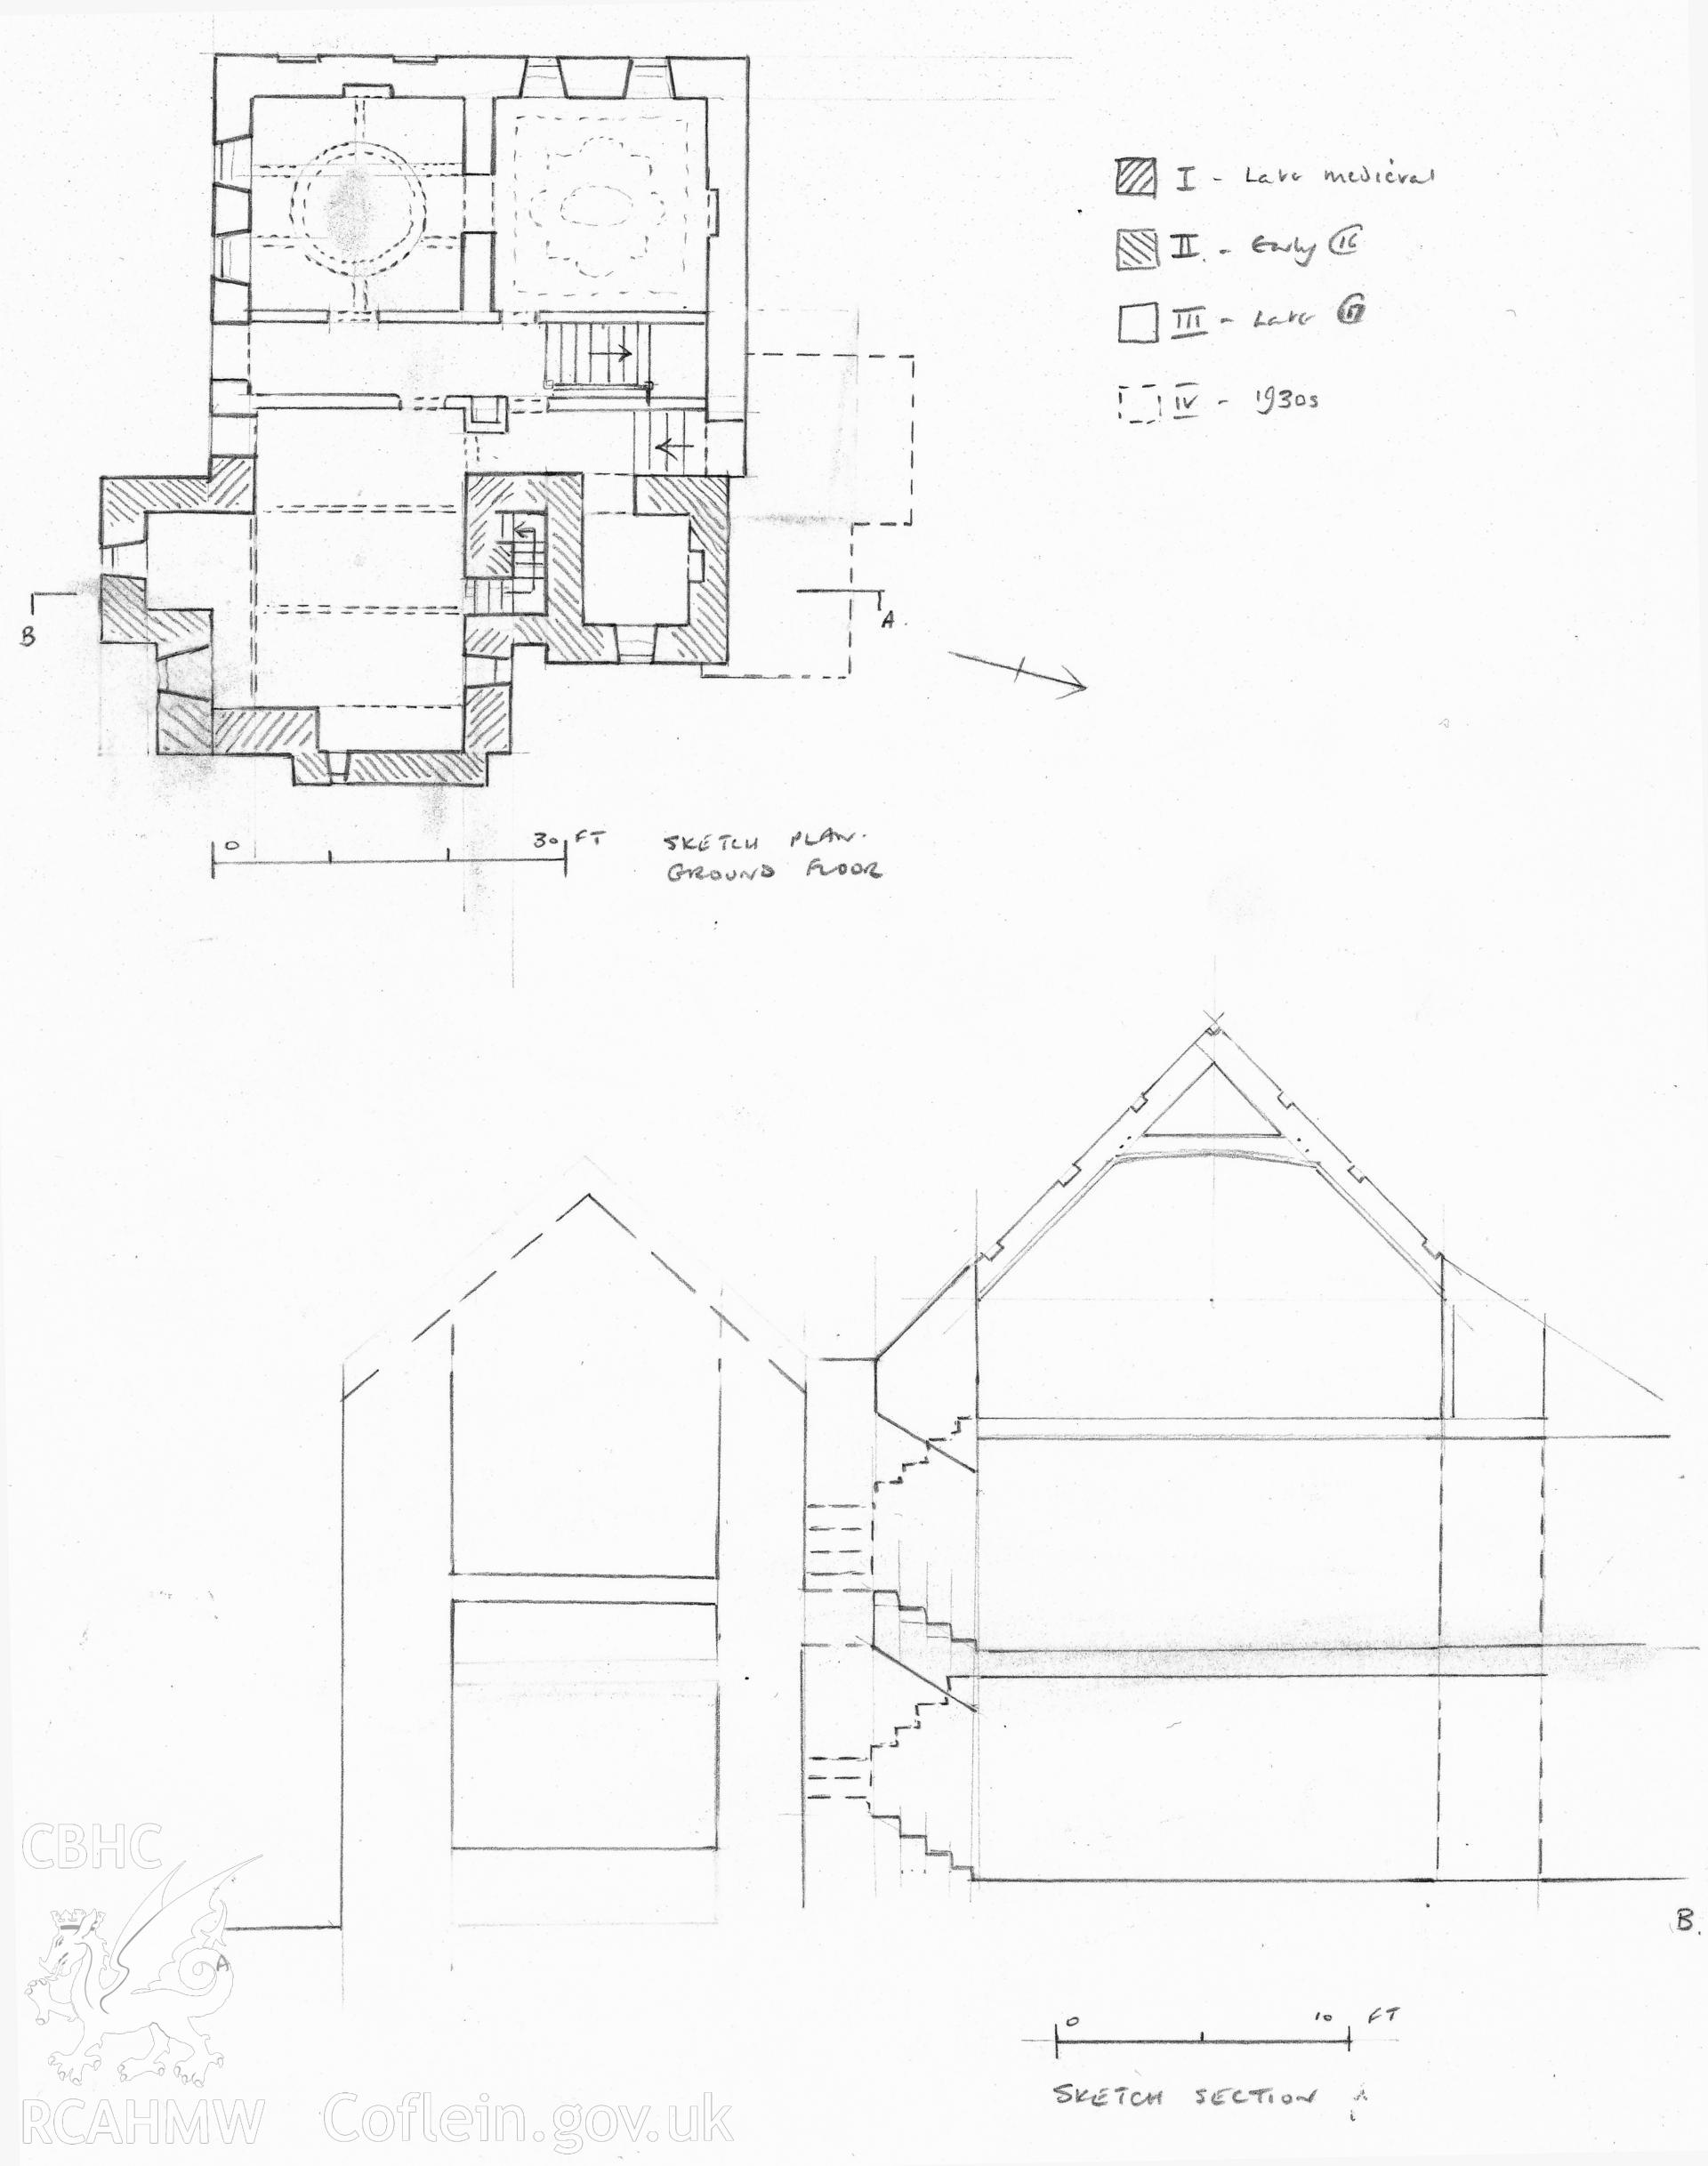 Sketch of ground floor plan and section for Plas-y-Wern, Llanarth, Cards., also known as Wern-Newydd.